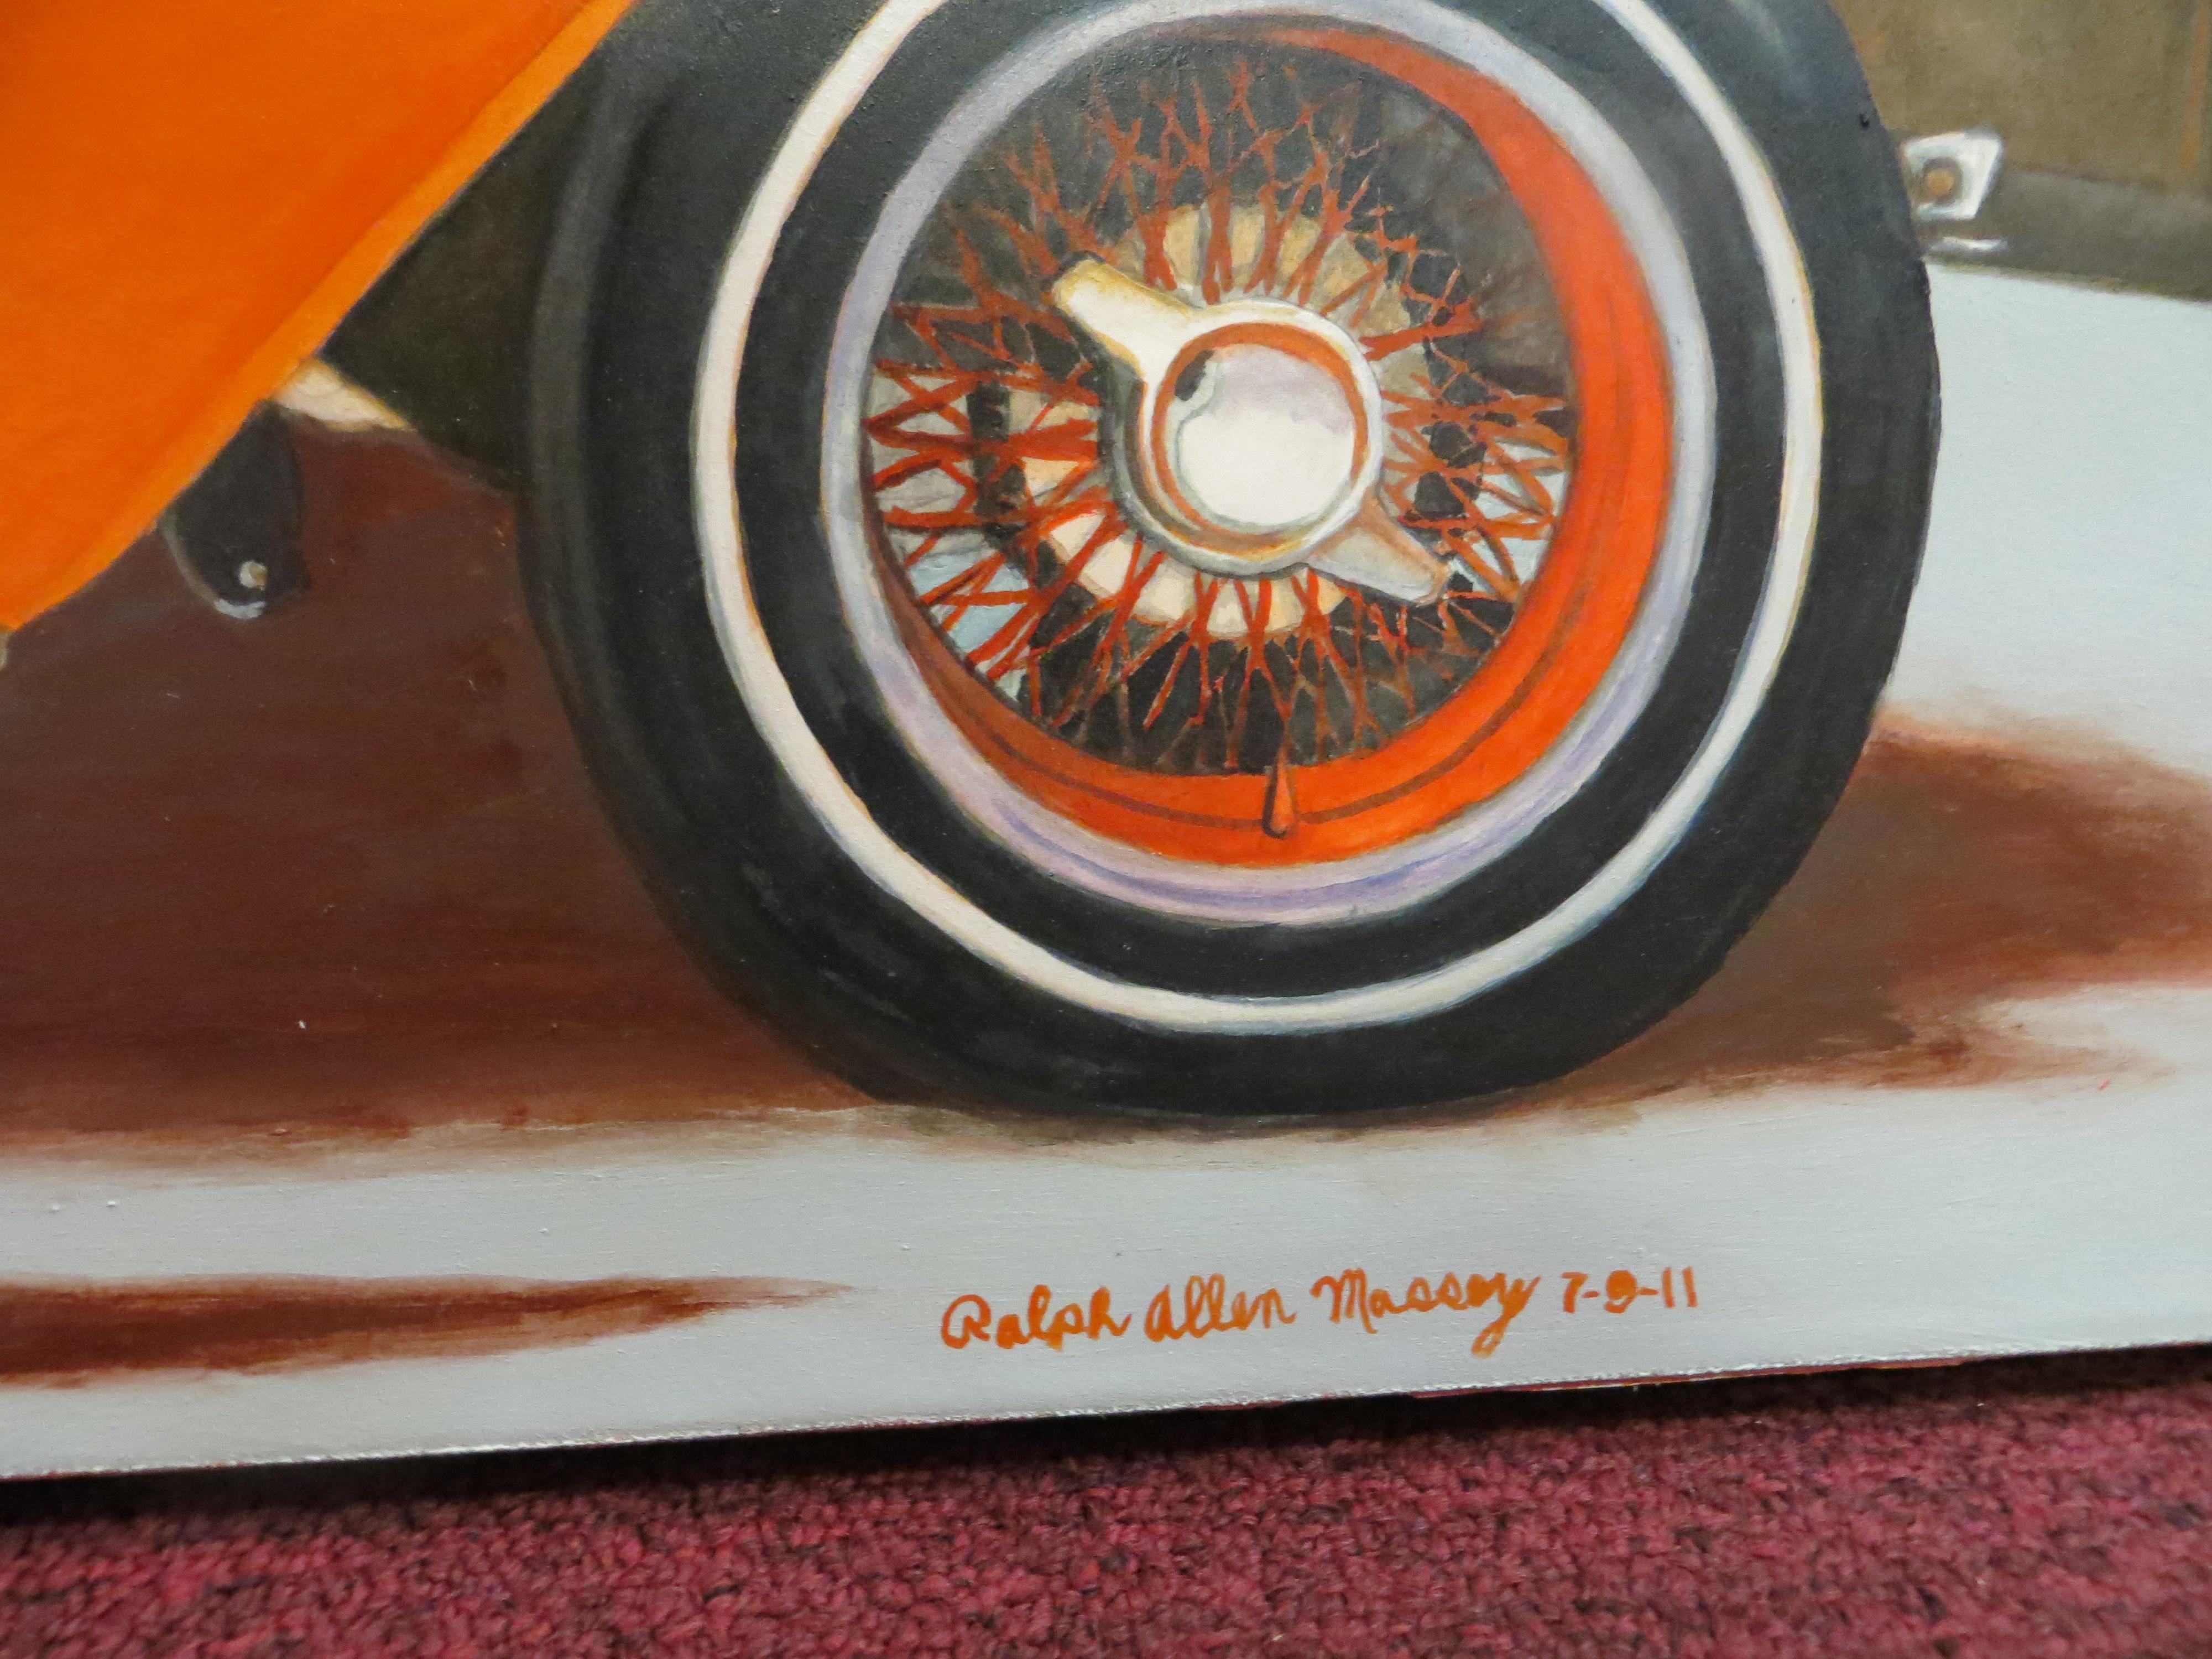 Orange Road Rockey by Ralph Allen Massey 5